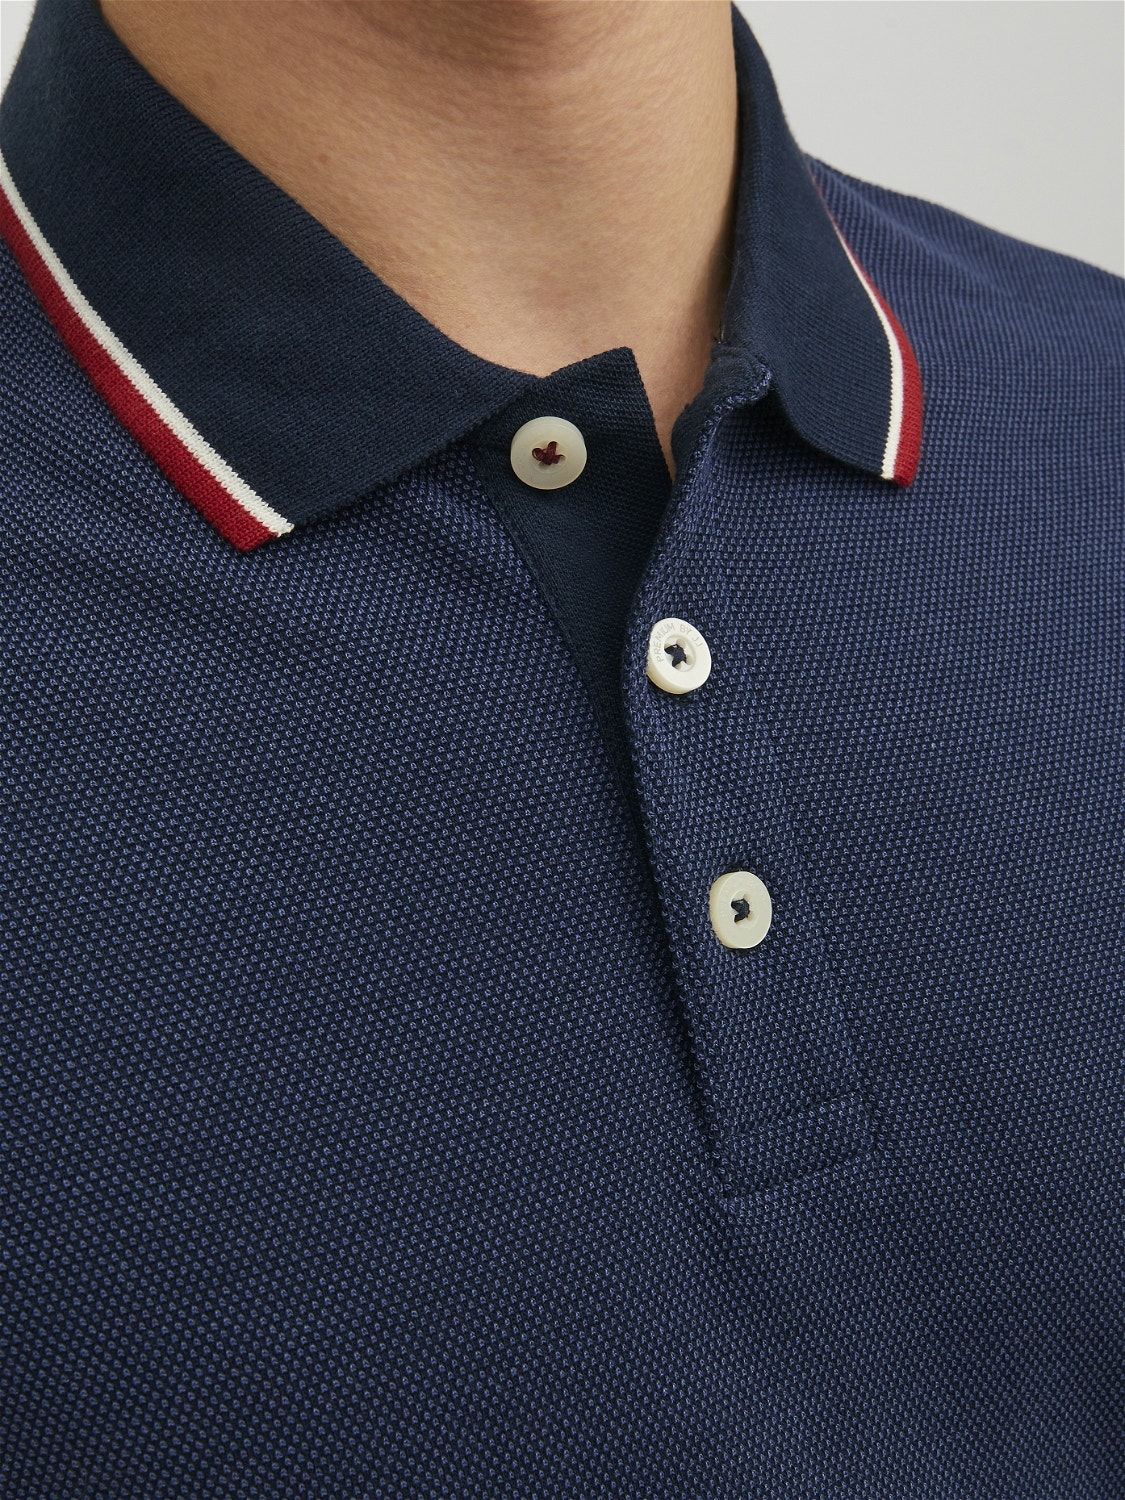 Jack & Jones Yksivärinen Polo T-shirt -Navy Blazer - 12169064